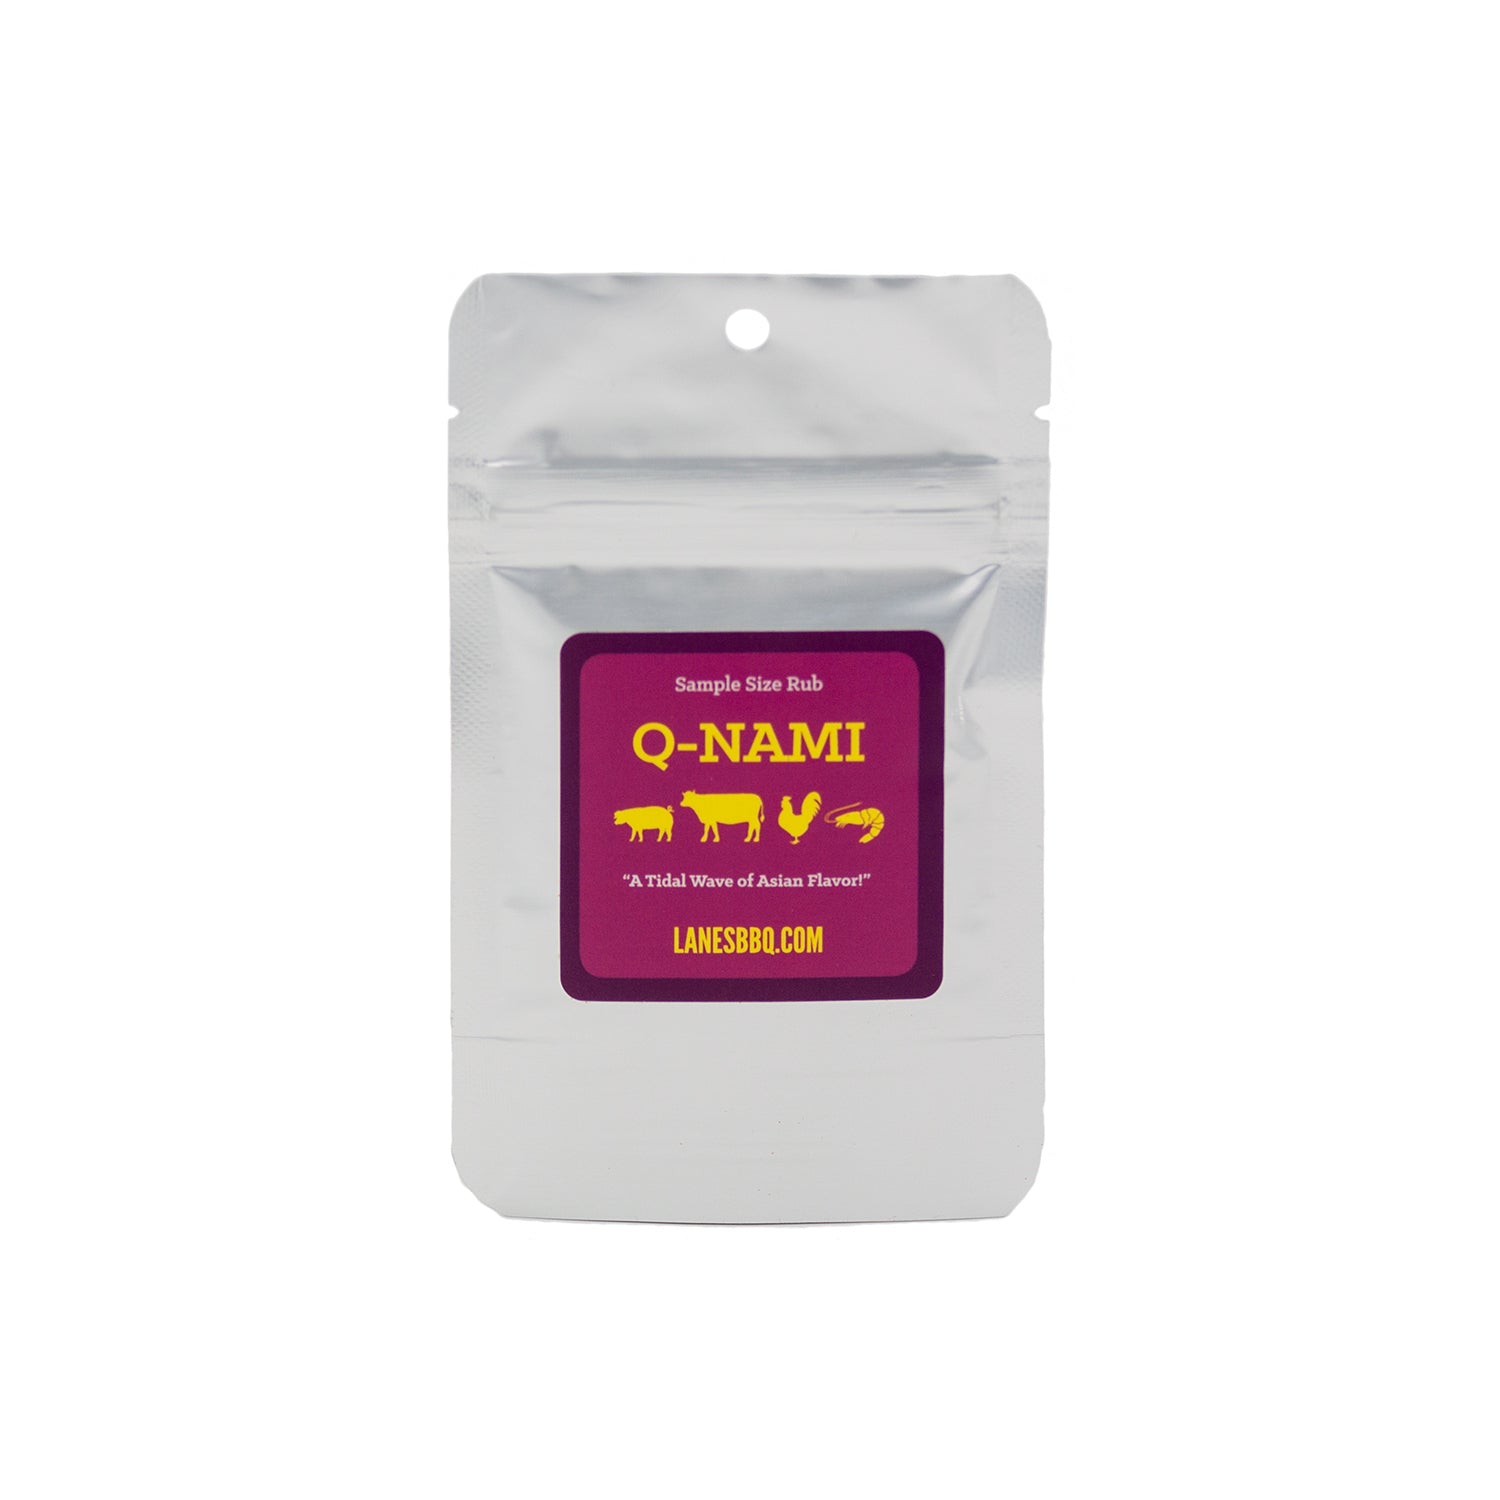 Q-NAMI Rub - .50 oz Sample Bag